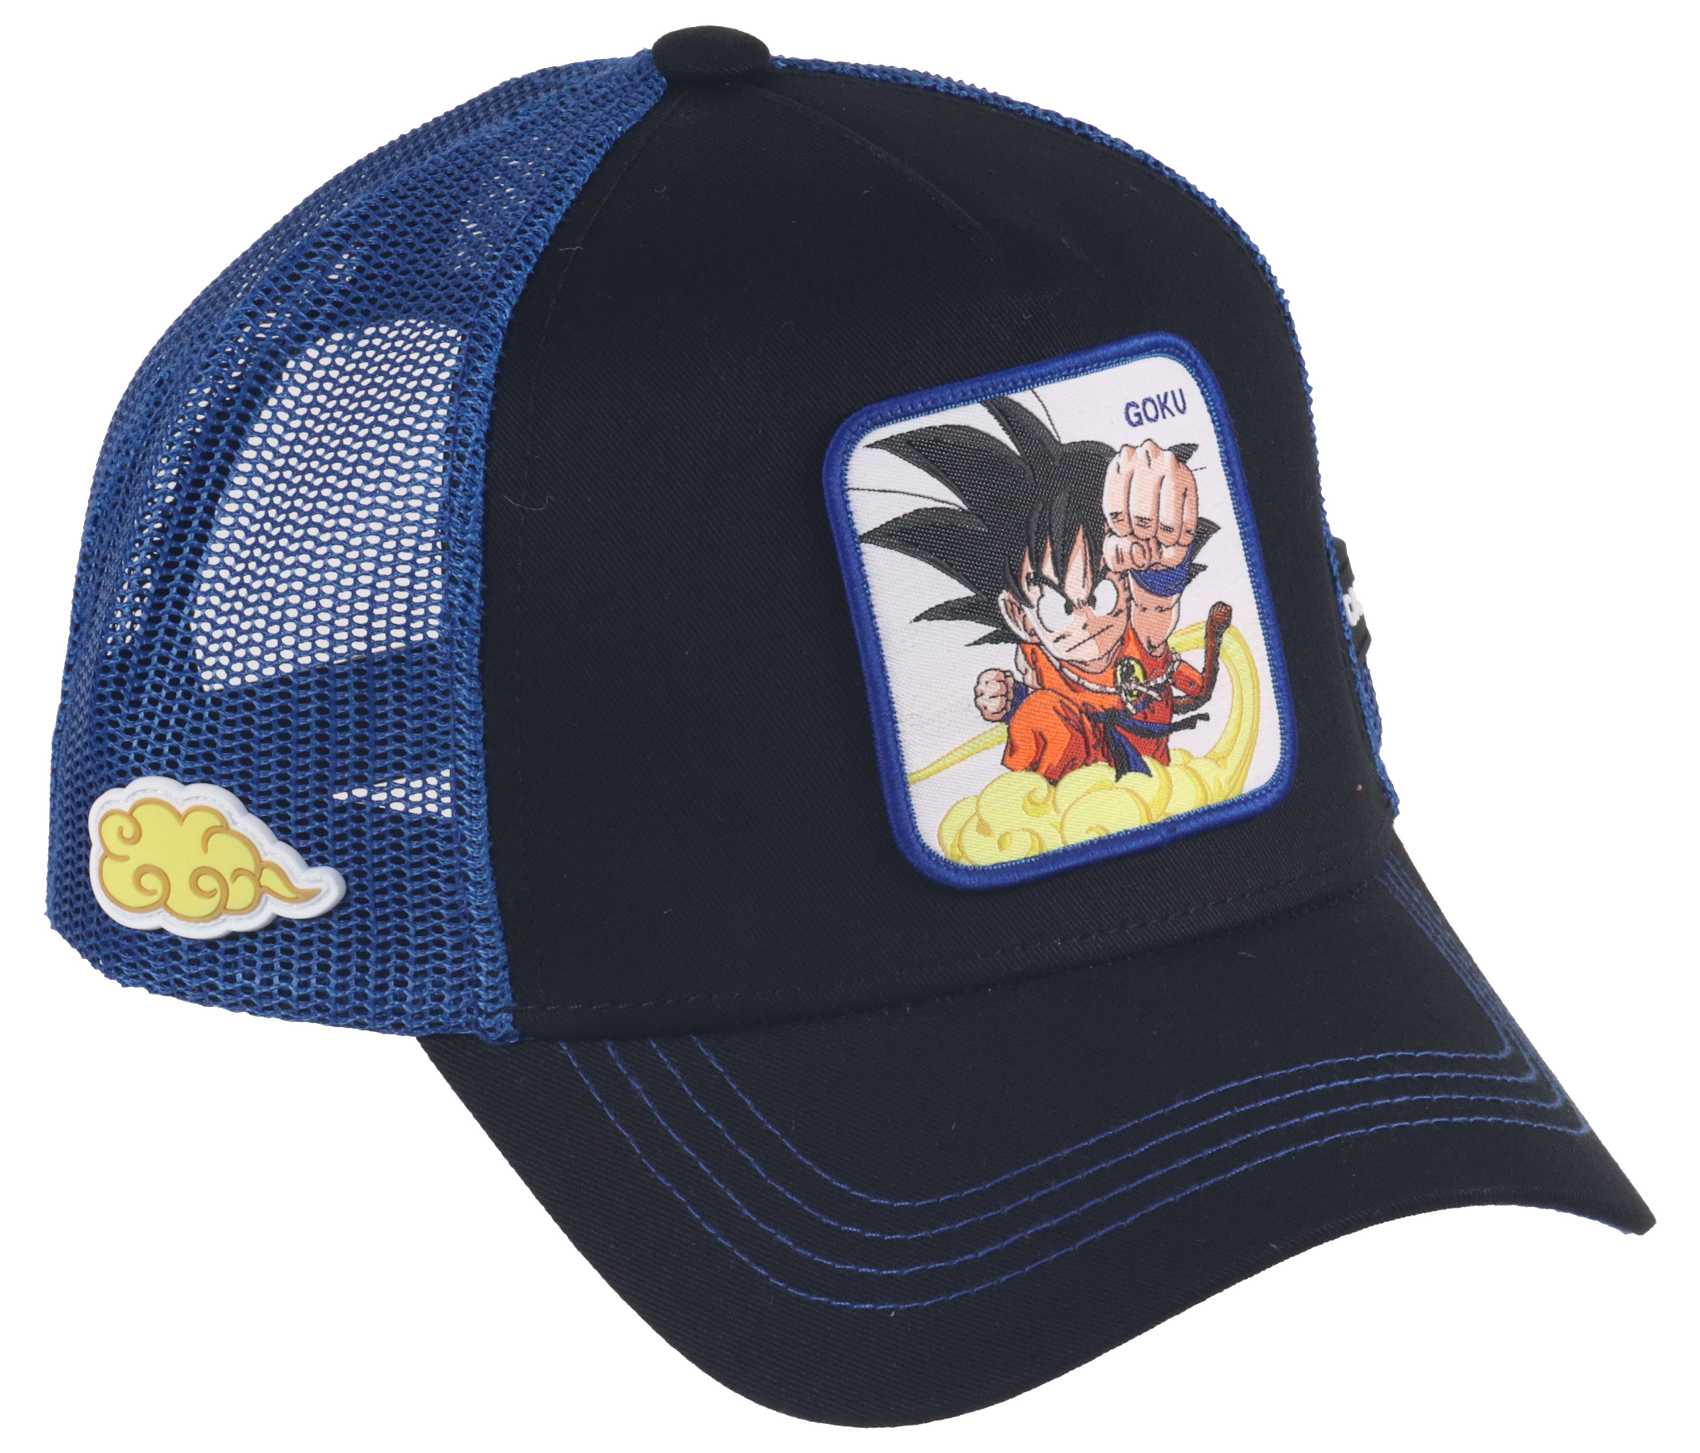 Goku Dragon Ball Trucker Cap Capslab